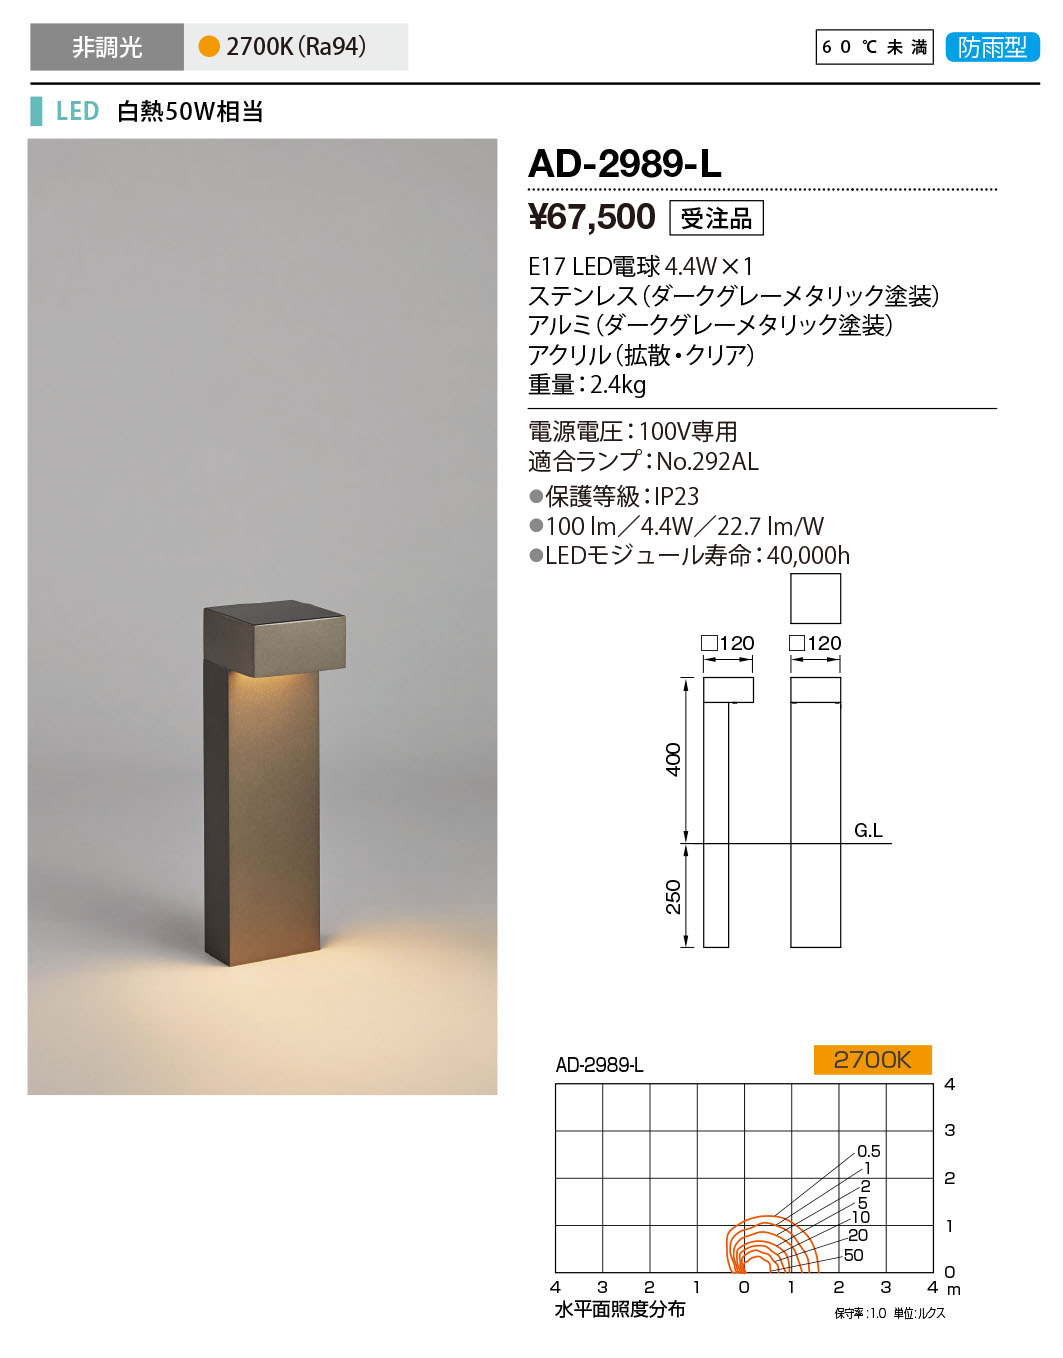 AD-2989-L 山田照明 ガーデンライト ダークグレーメタリック LED - 4